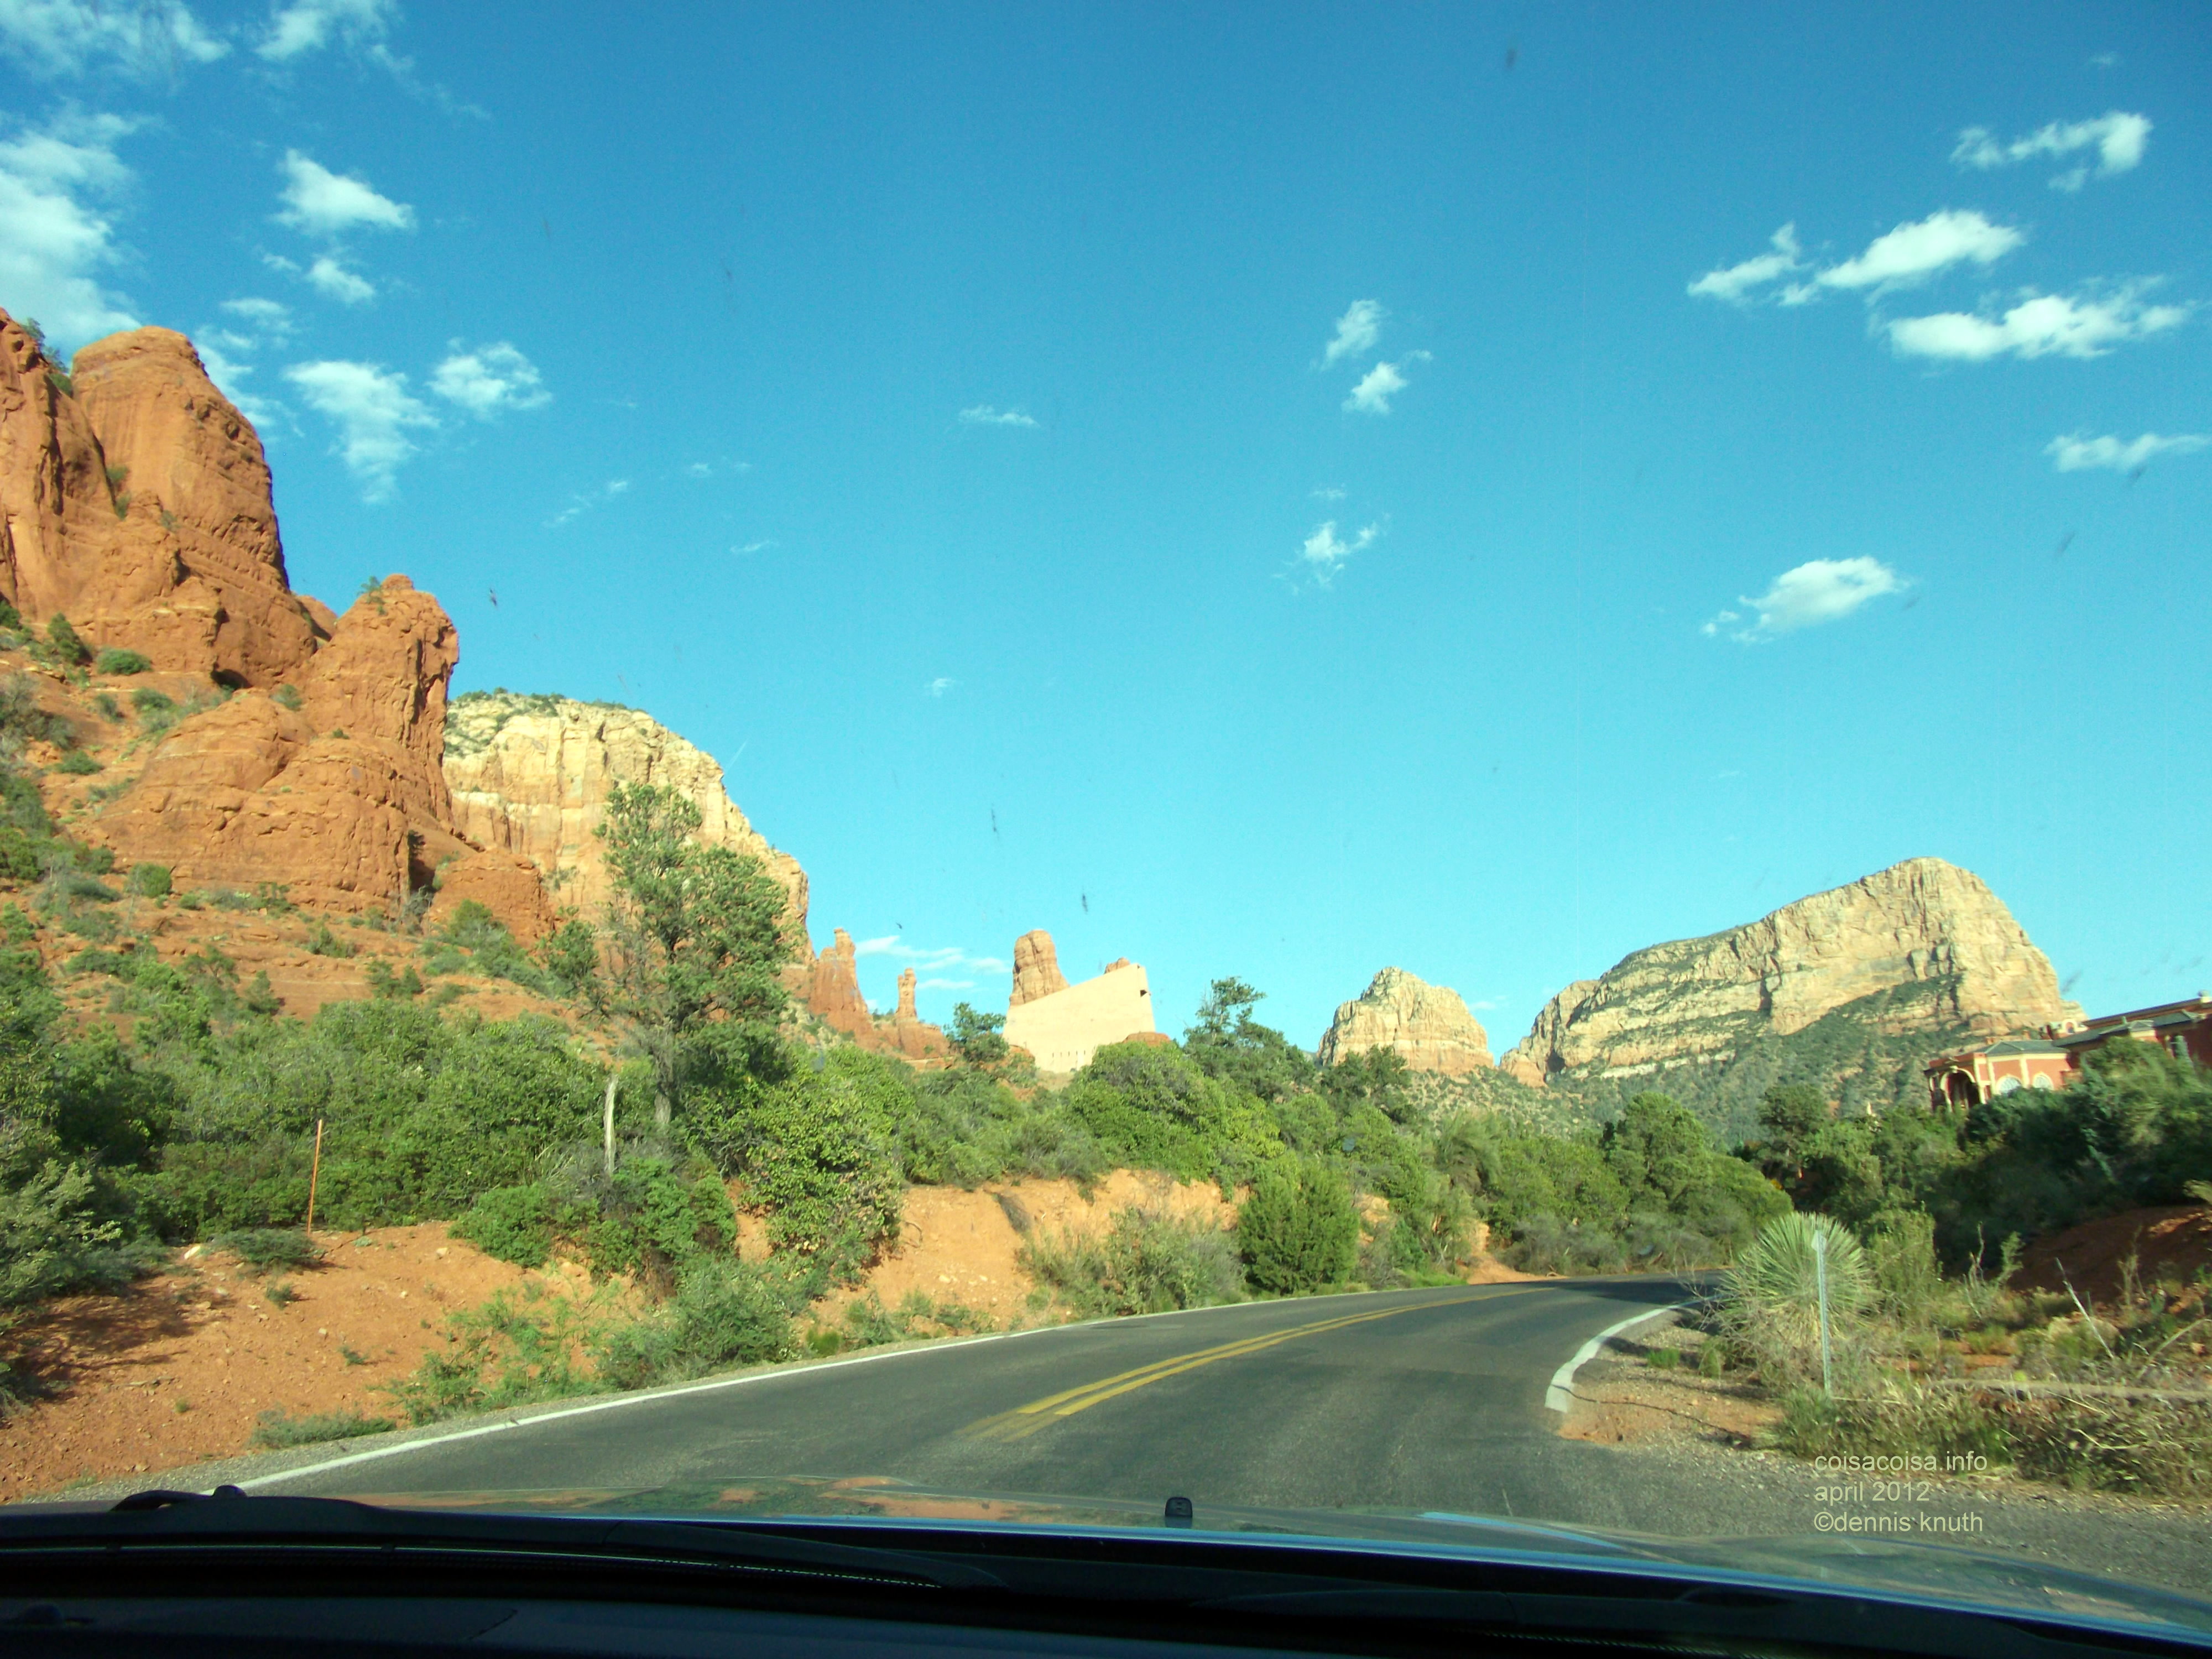 The Road rises up to meet you in Sedona Arizona